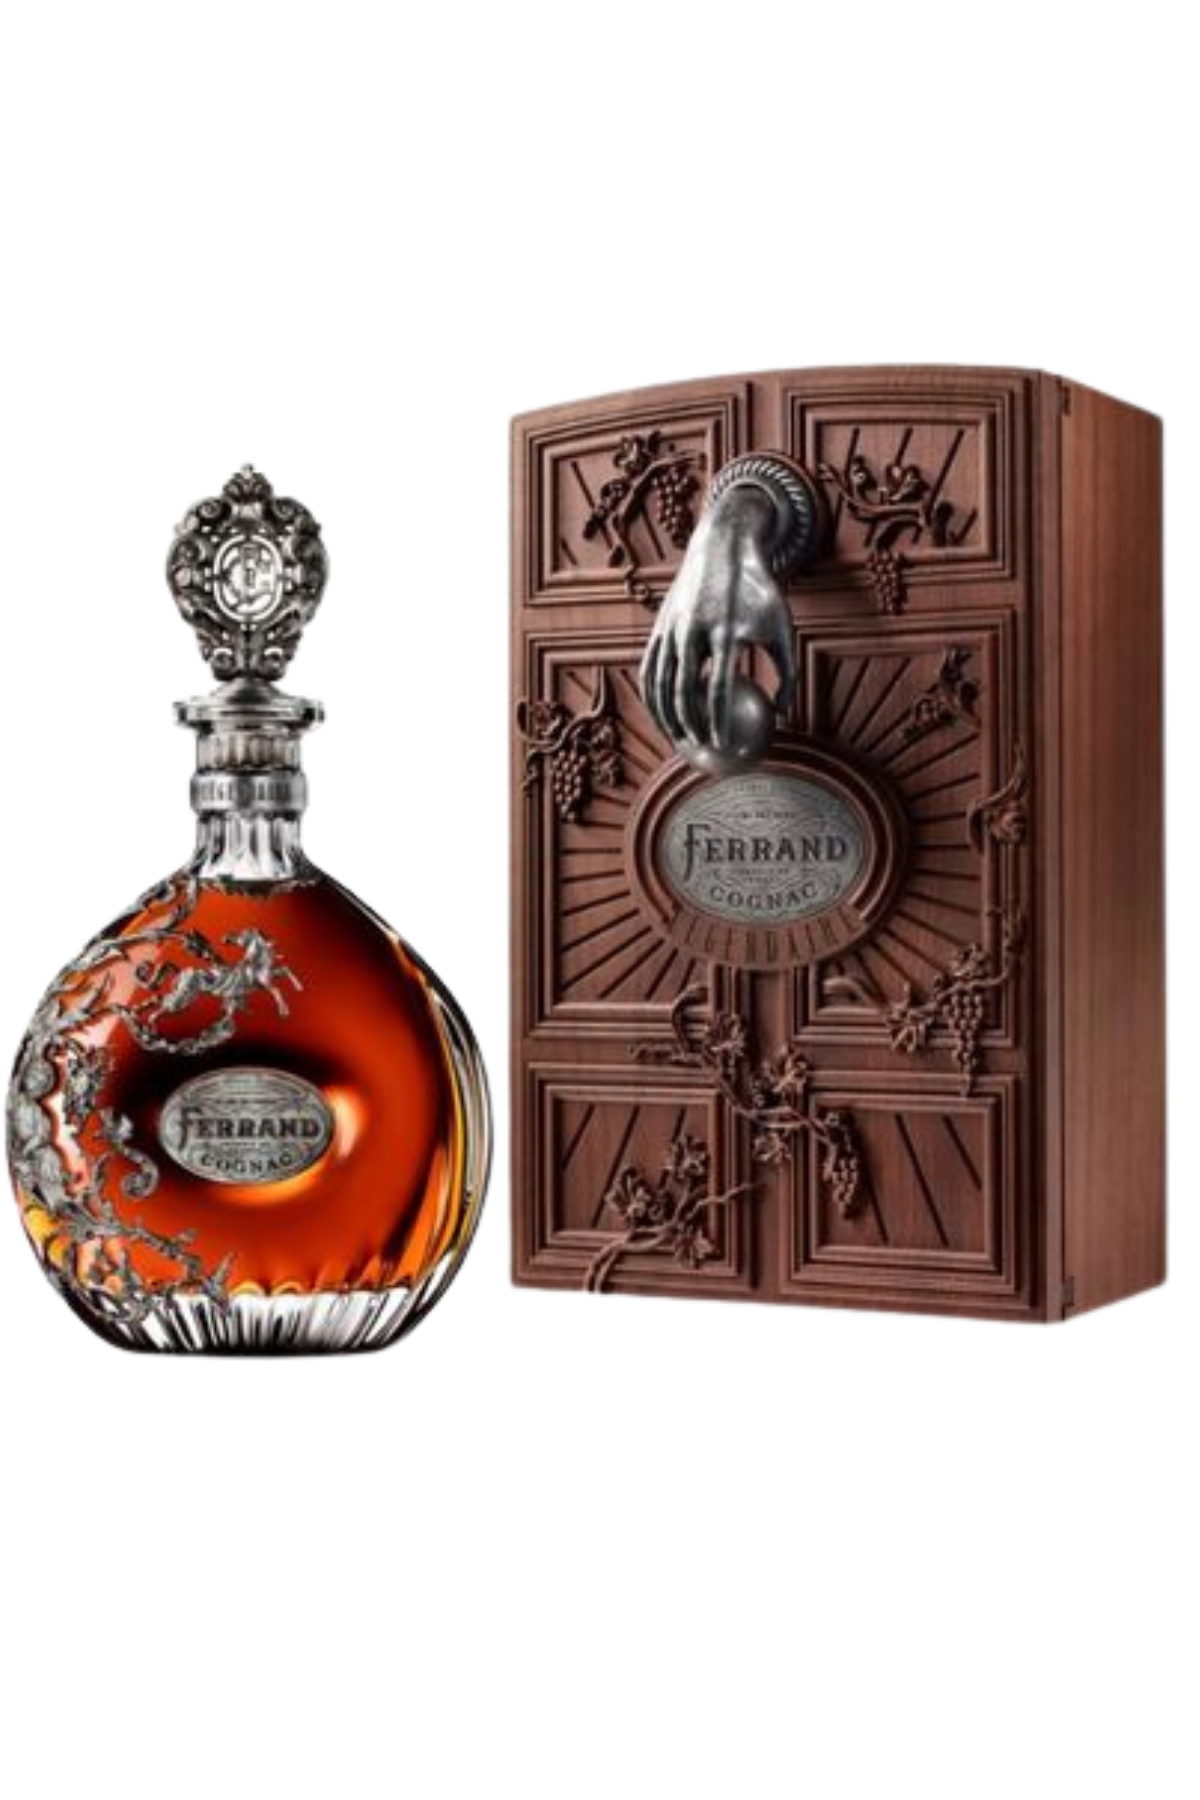 Cognac Ferrand Légendaire Package exclusivo de edición limitada - Maison Ferrand